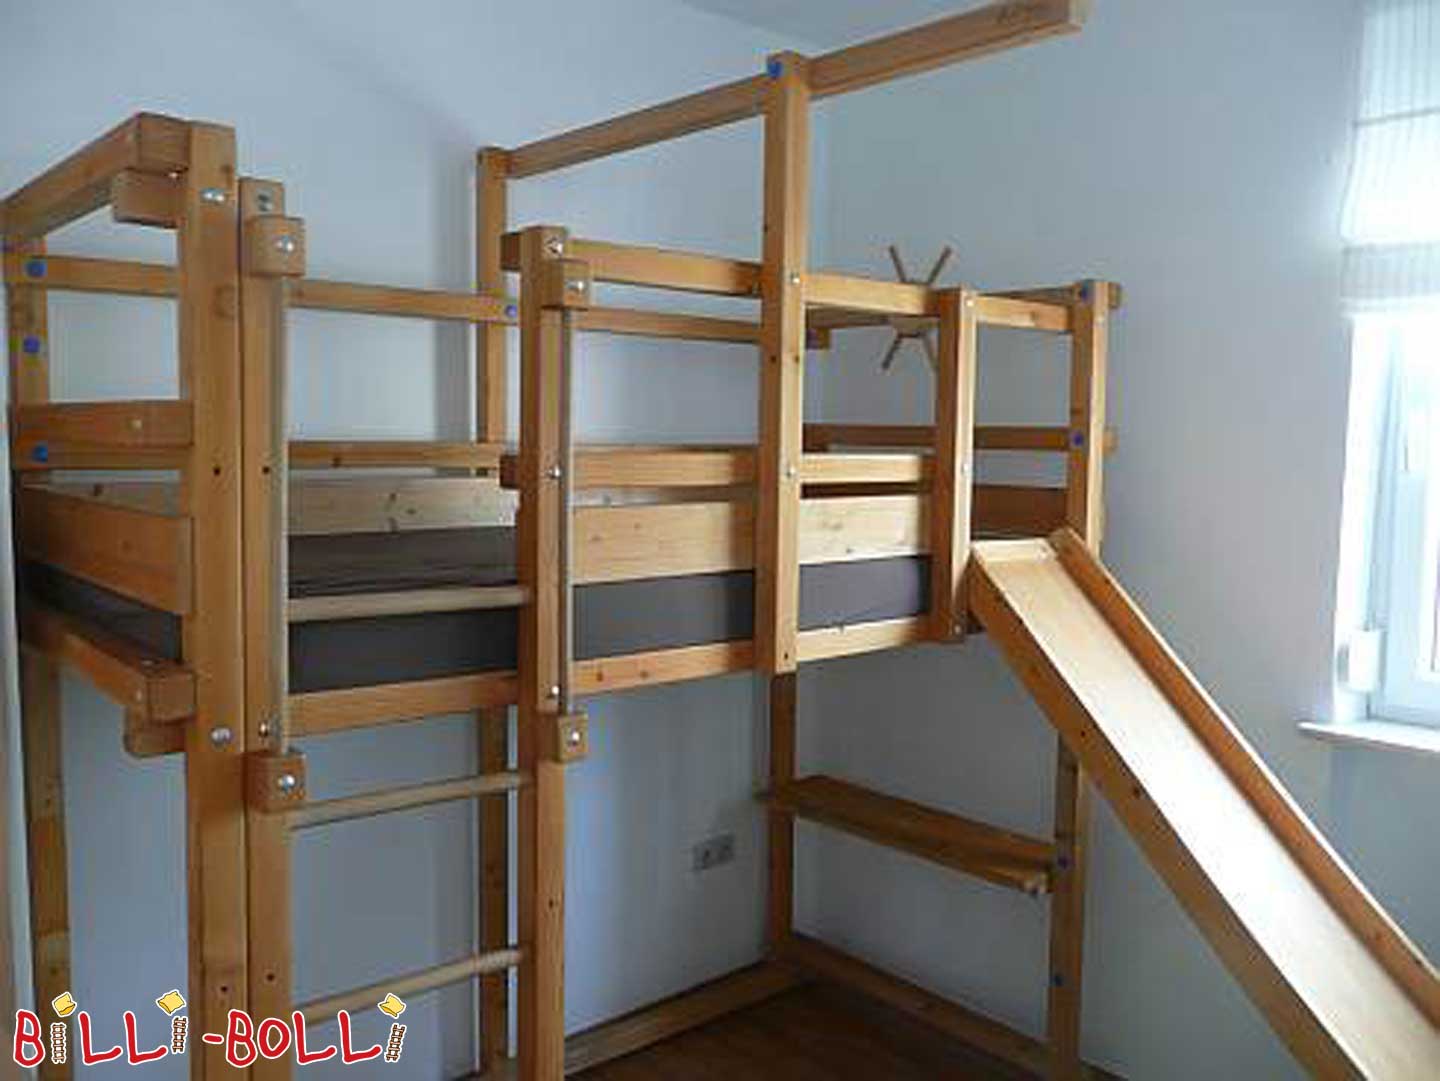 Billi-Bolli Pirate Loft Bed (Category: second hand loft bed)